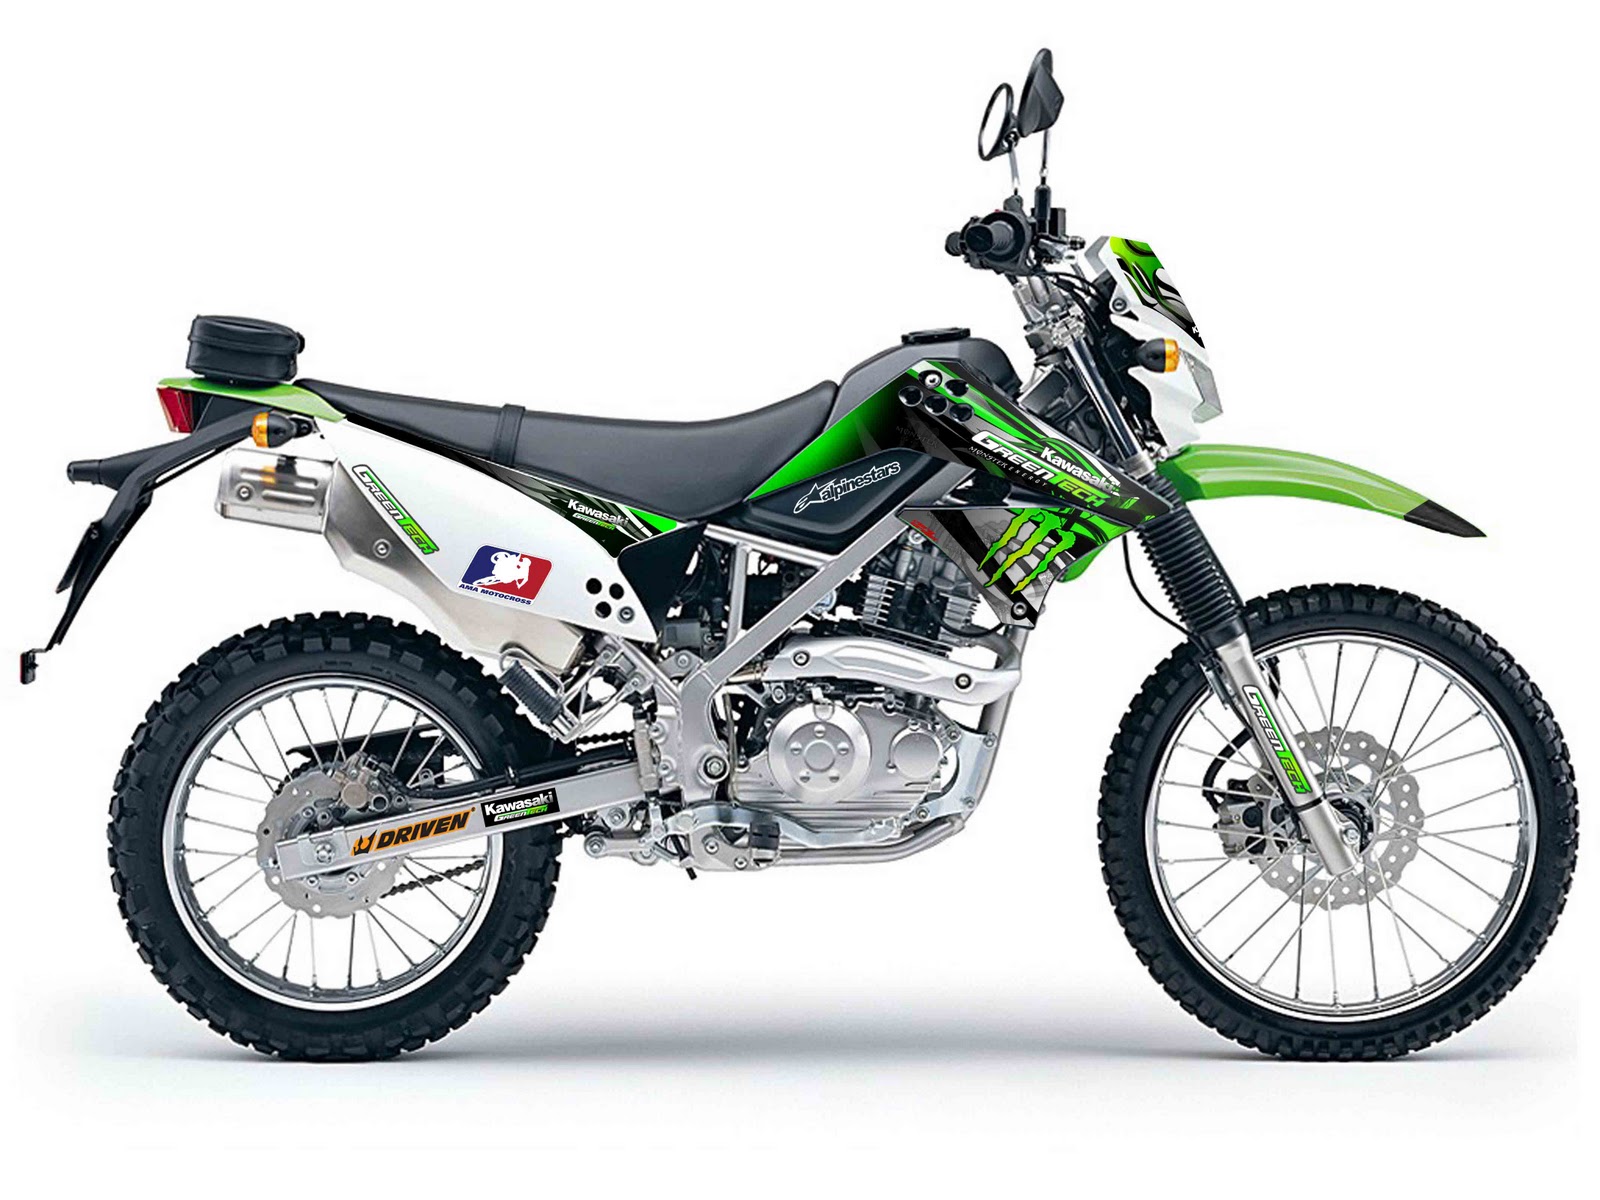 Harga Motor  Kawasaki  Ninja KLX  150S  Spesifikasi